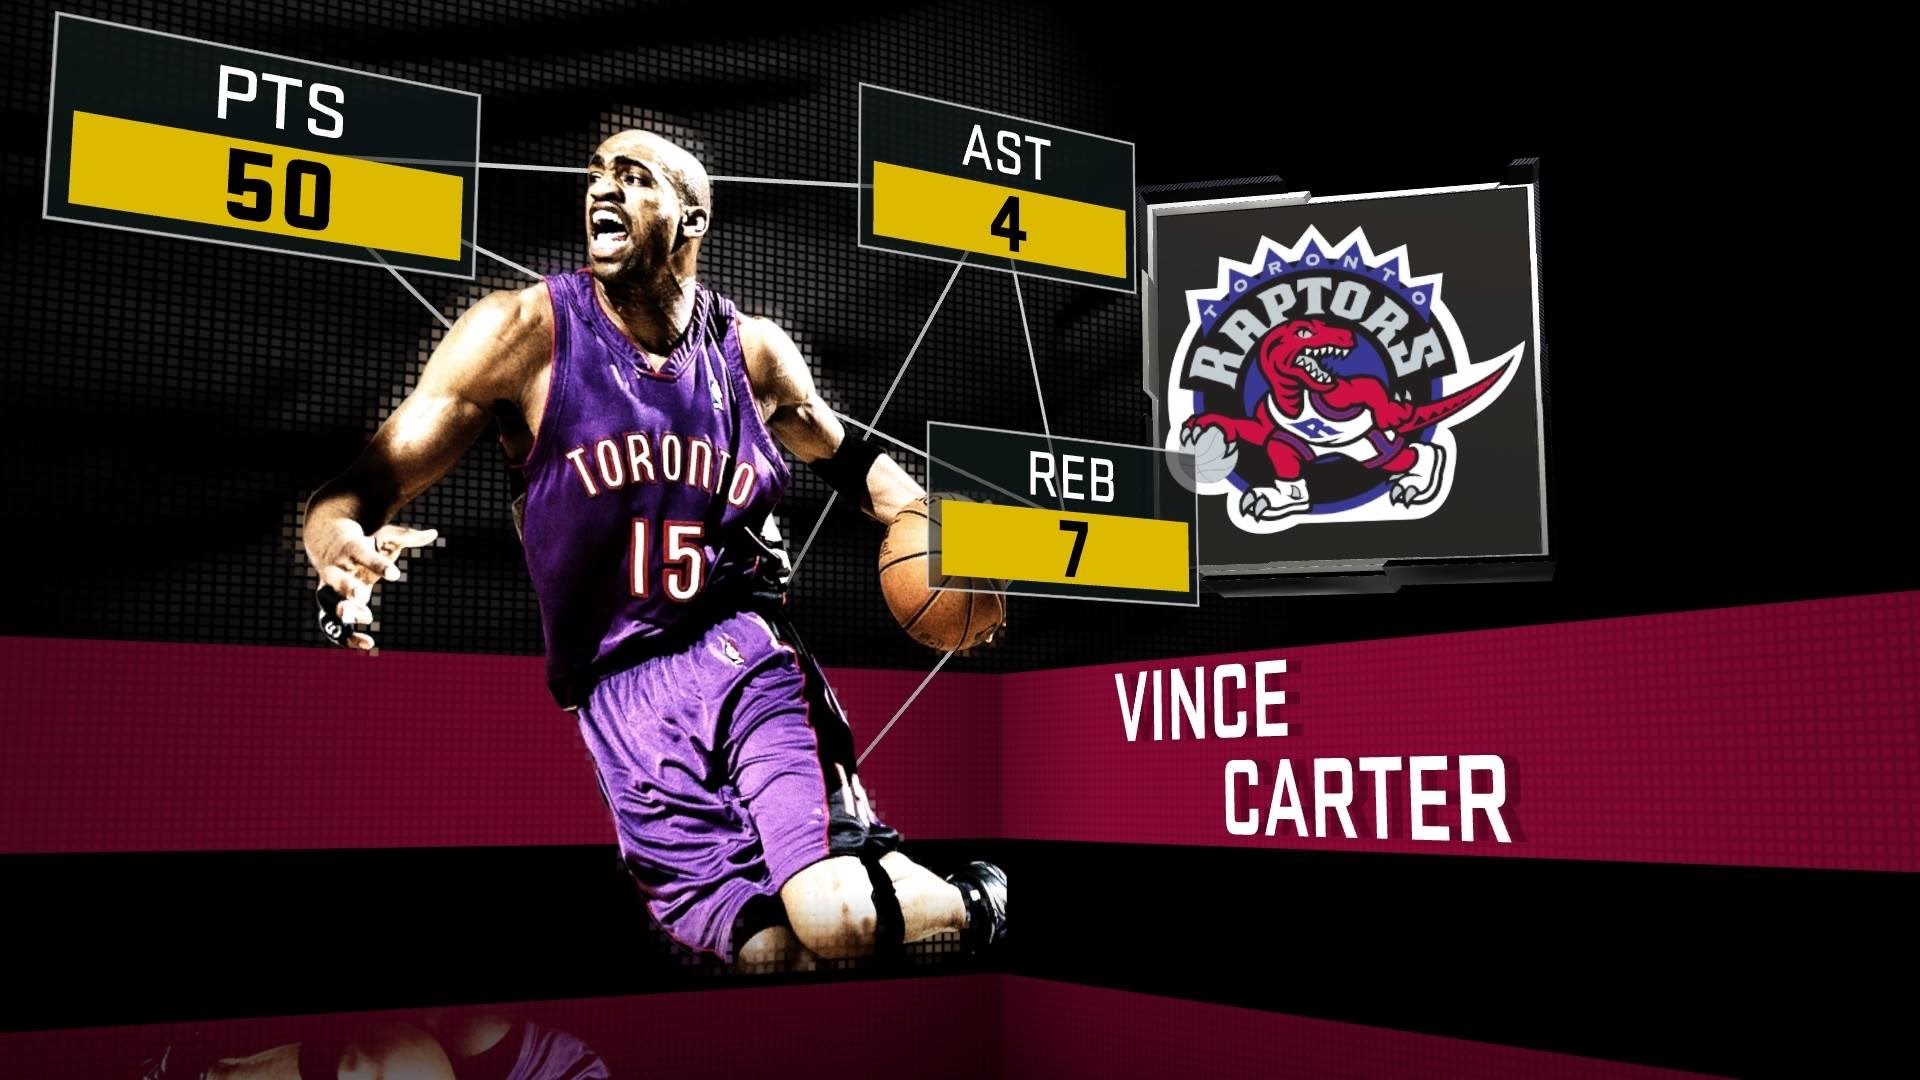 1920x1080 NBA 2K16 PS4 - Toronto Raptors vs San Antonio Spurs - Vince Carter 50 Points